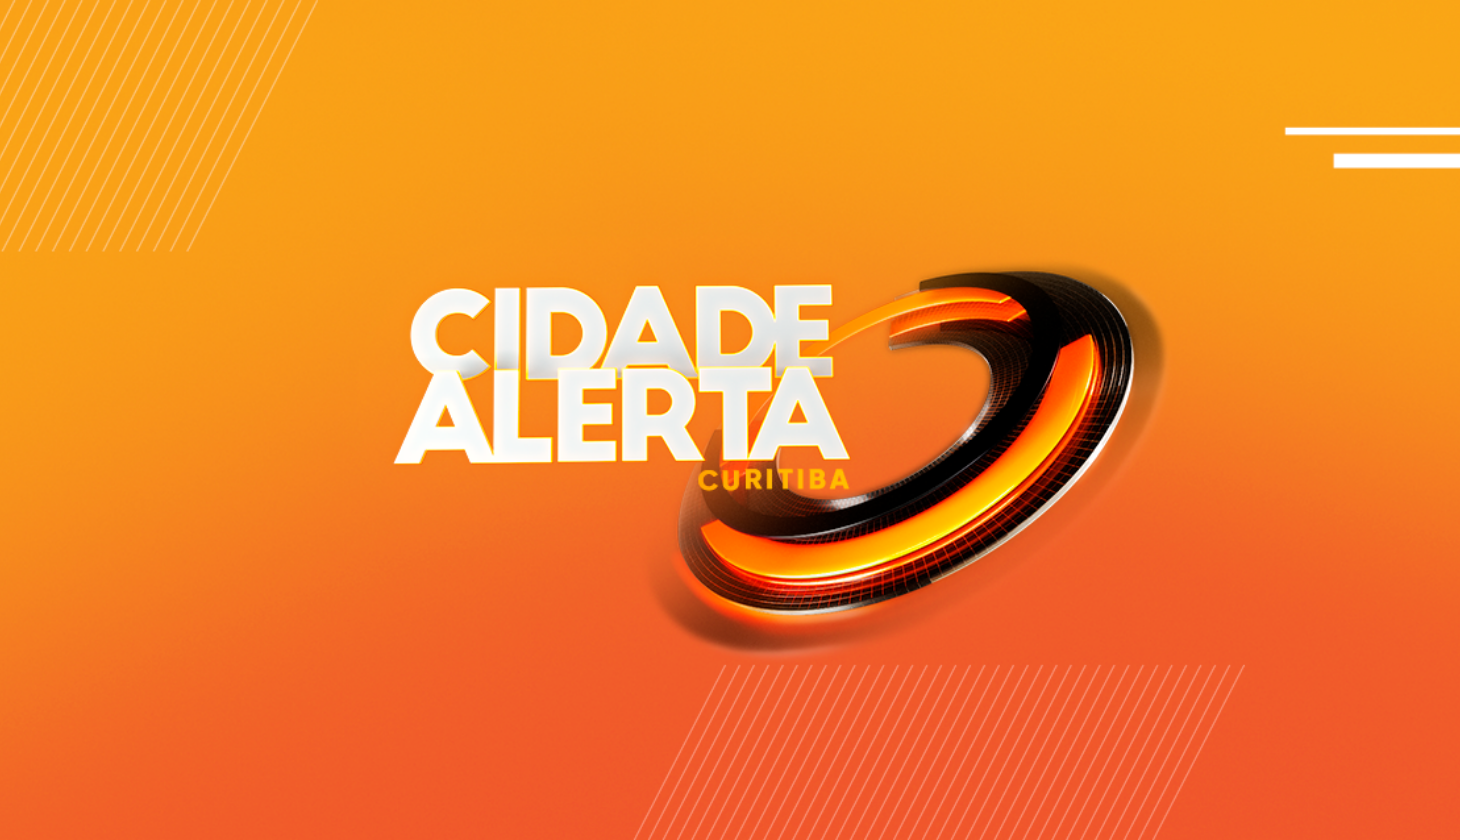 Cidade Alerta Curitiba